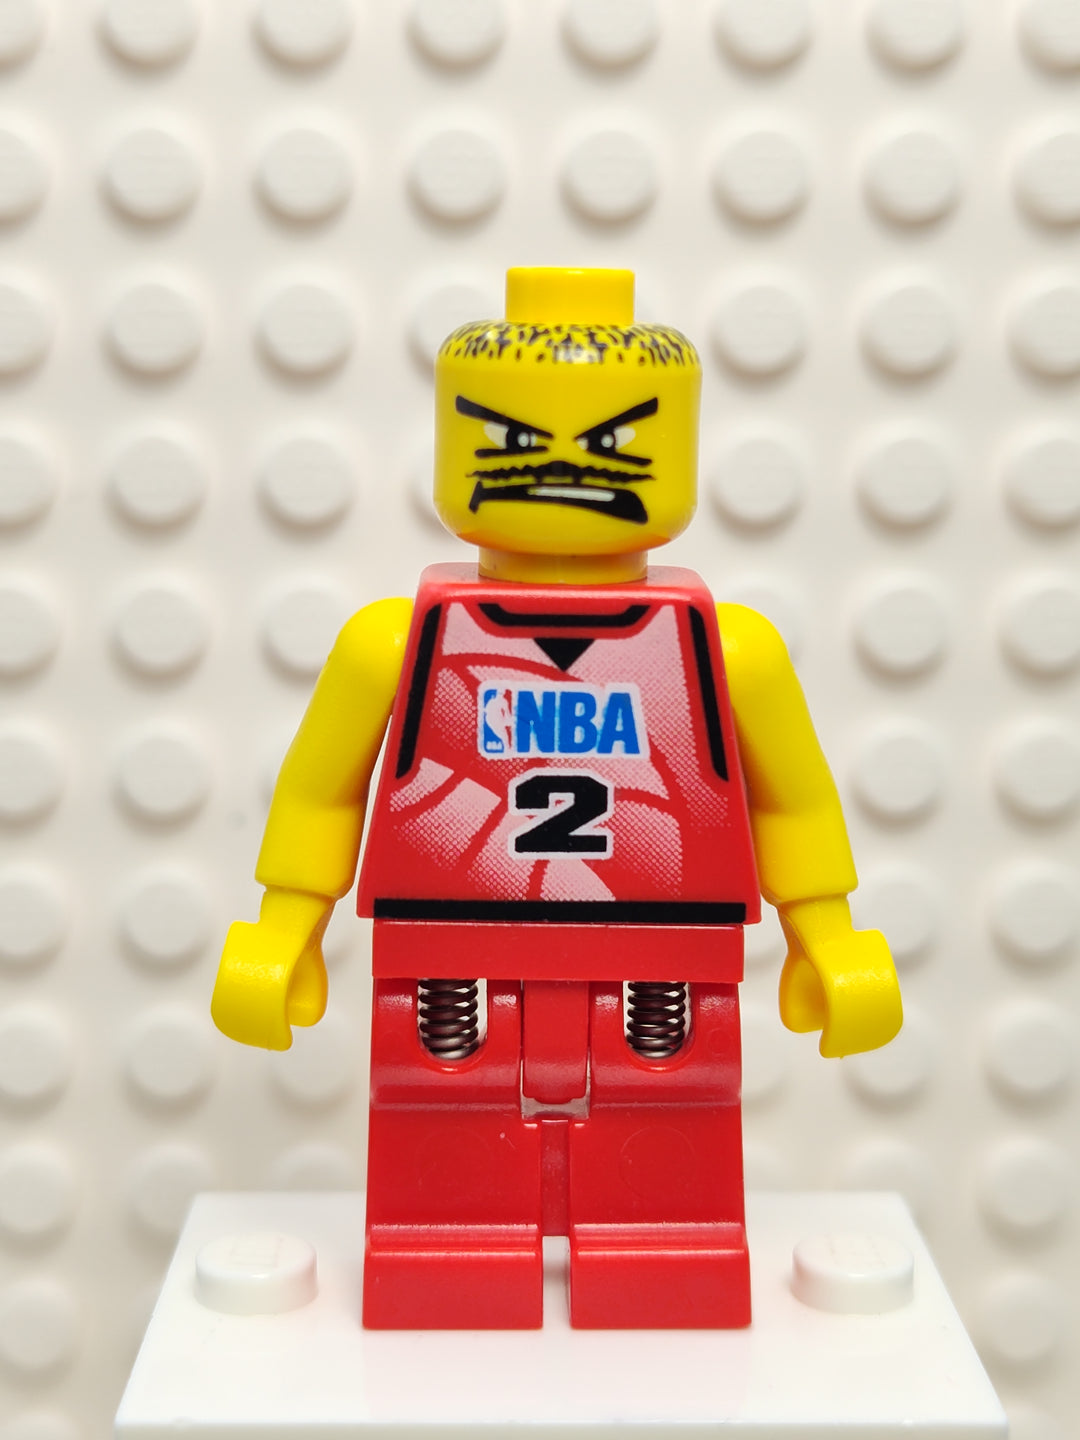 Lego NBA Player, Number 2, nba028